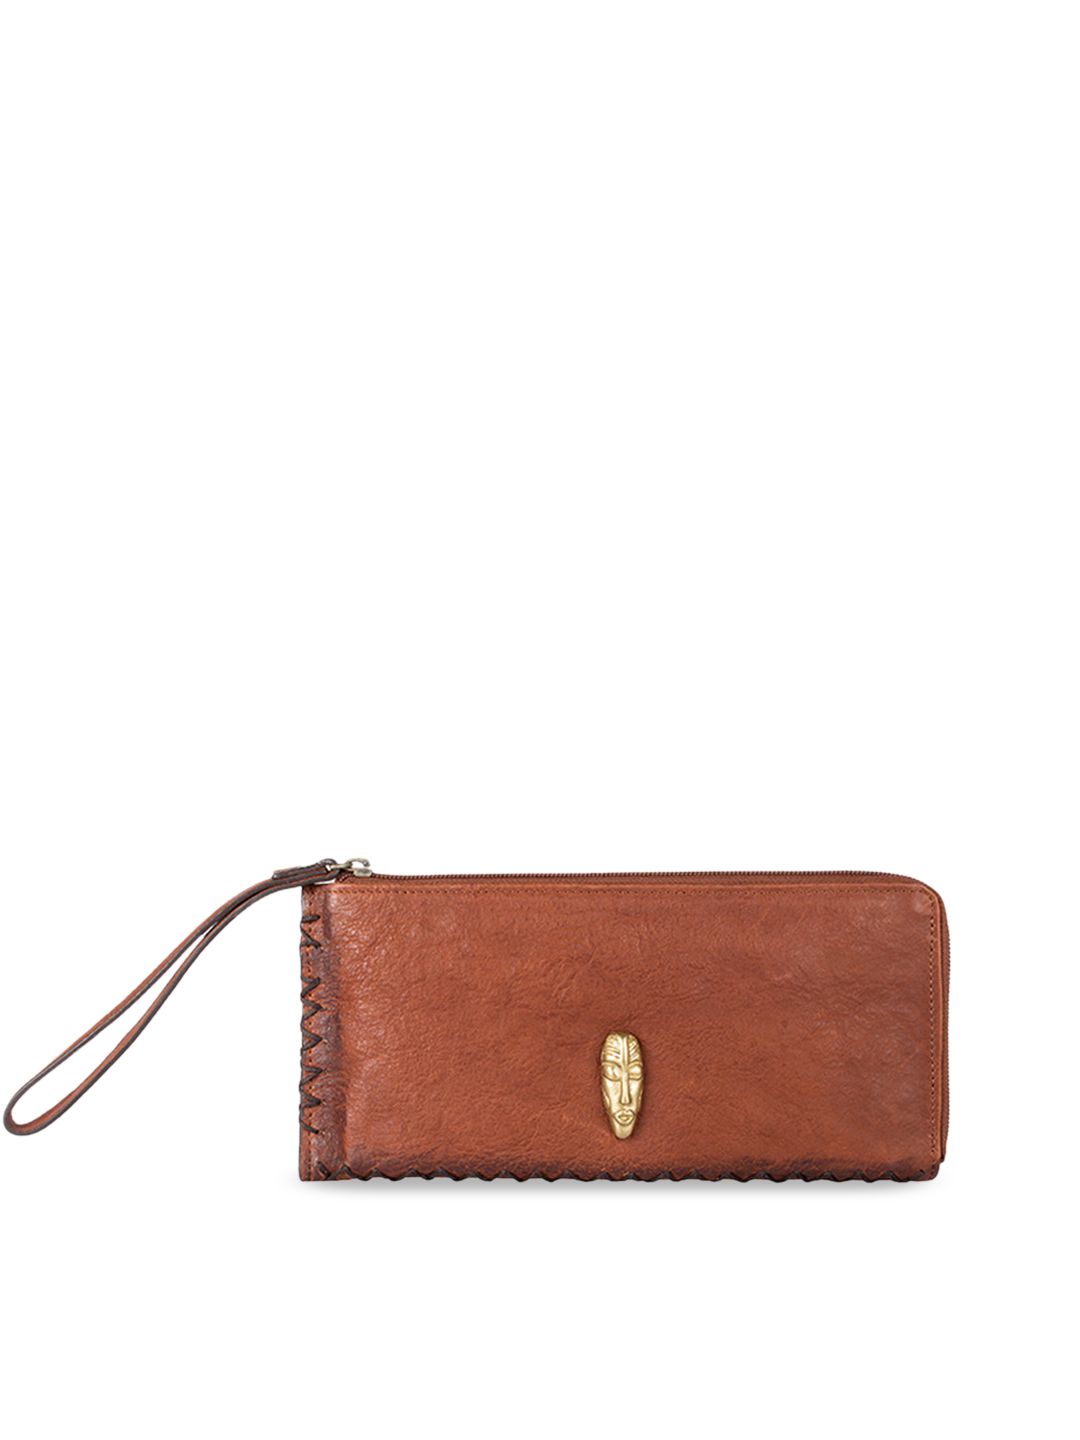 Hidesign Women Tan Brown Solid Leather Zip Around Wallet Price in India